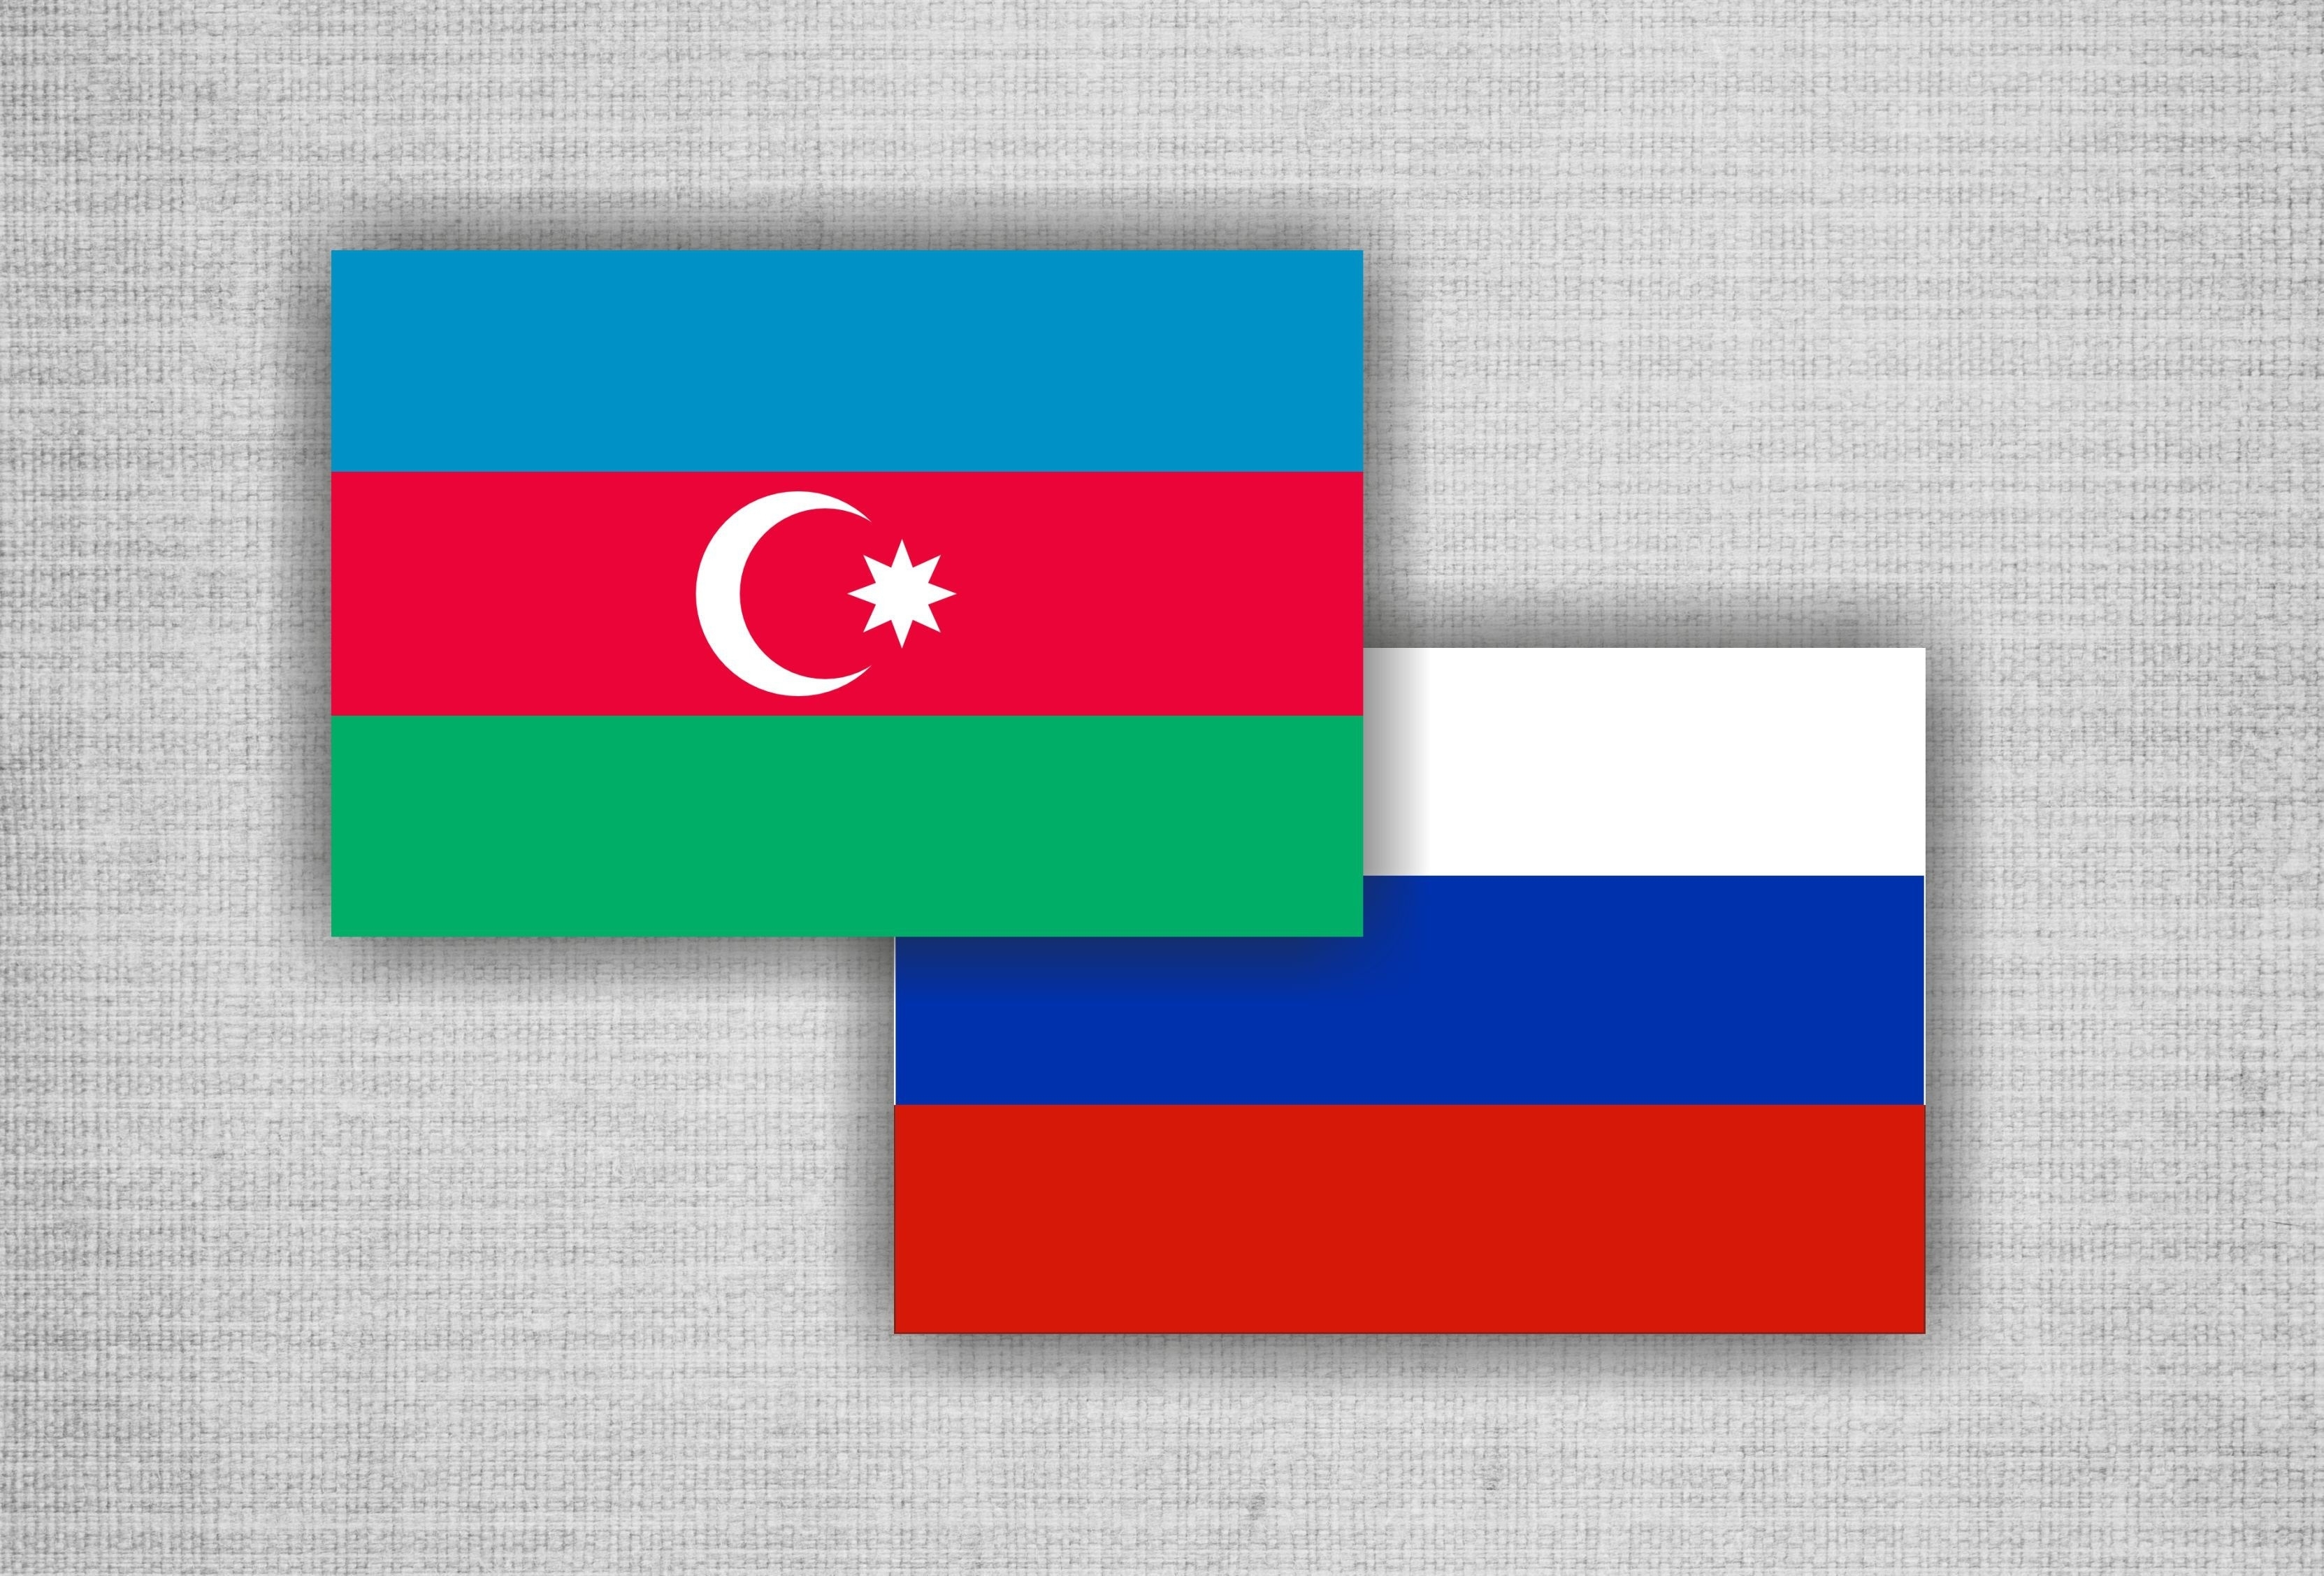 Азербайджан направил ноту России